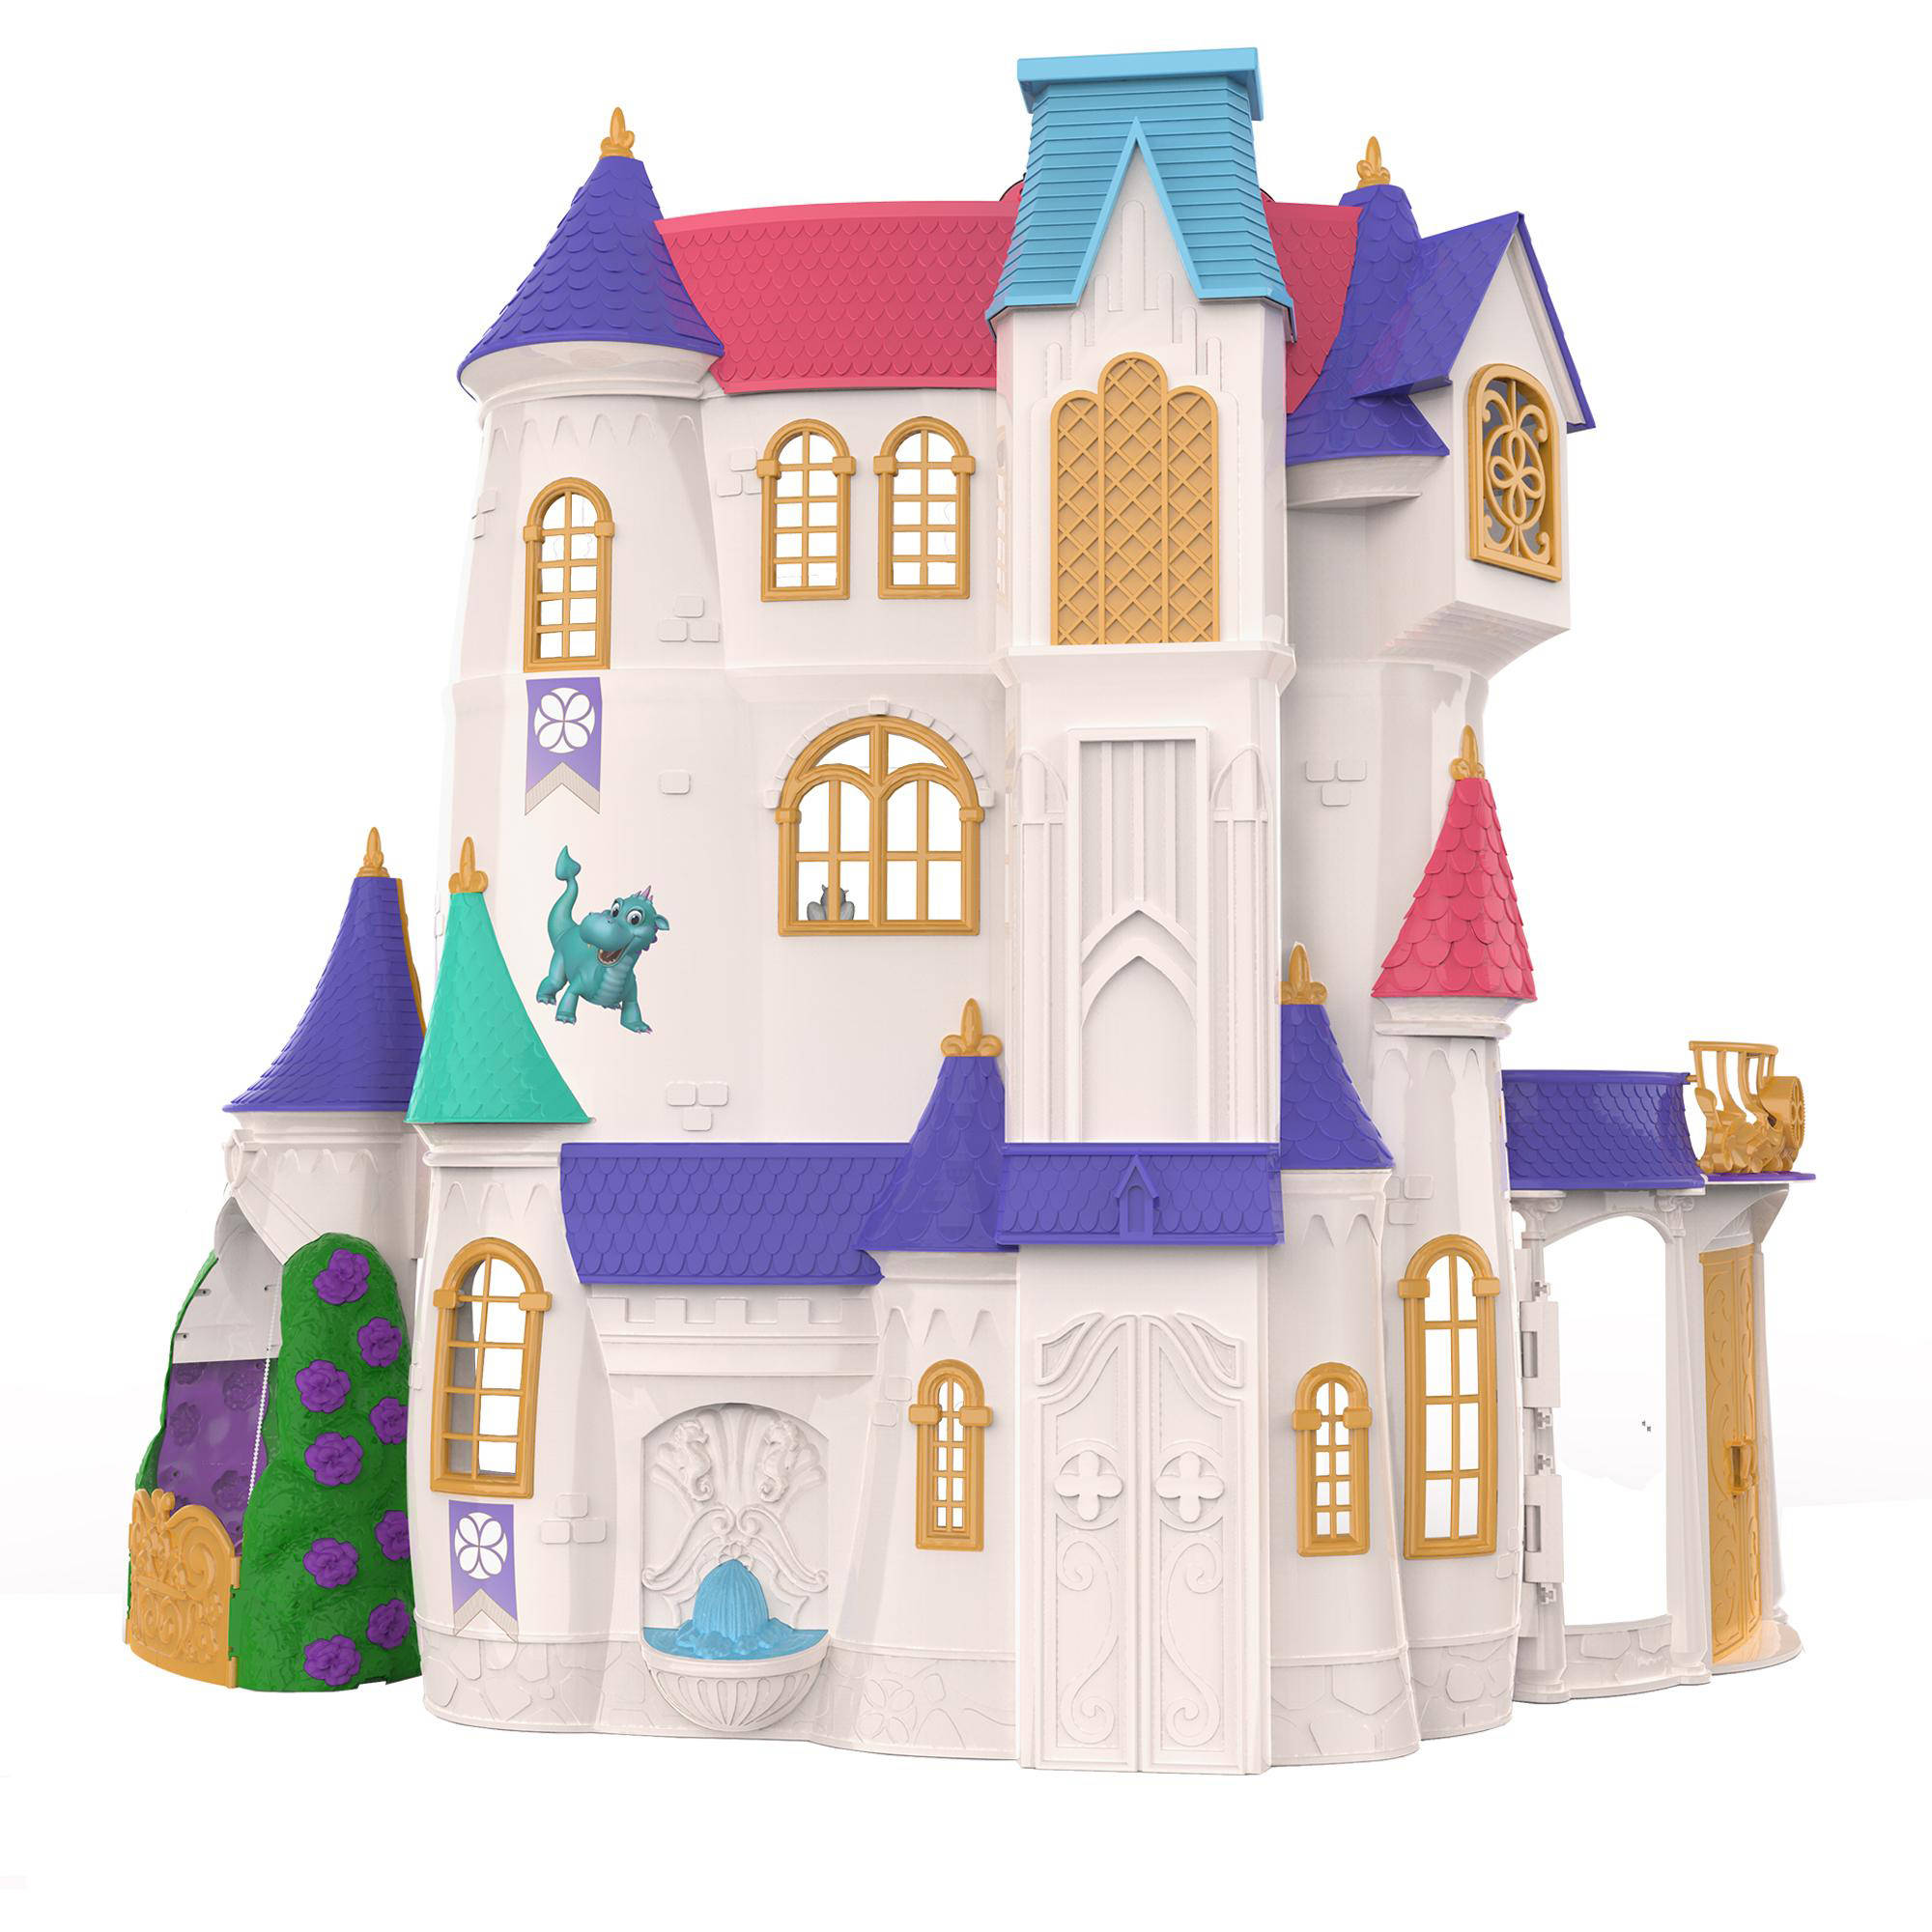 Sofia the First Disney Enchancian Castle Dollhouse - image 2 of 2